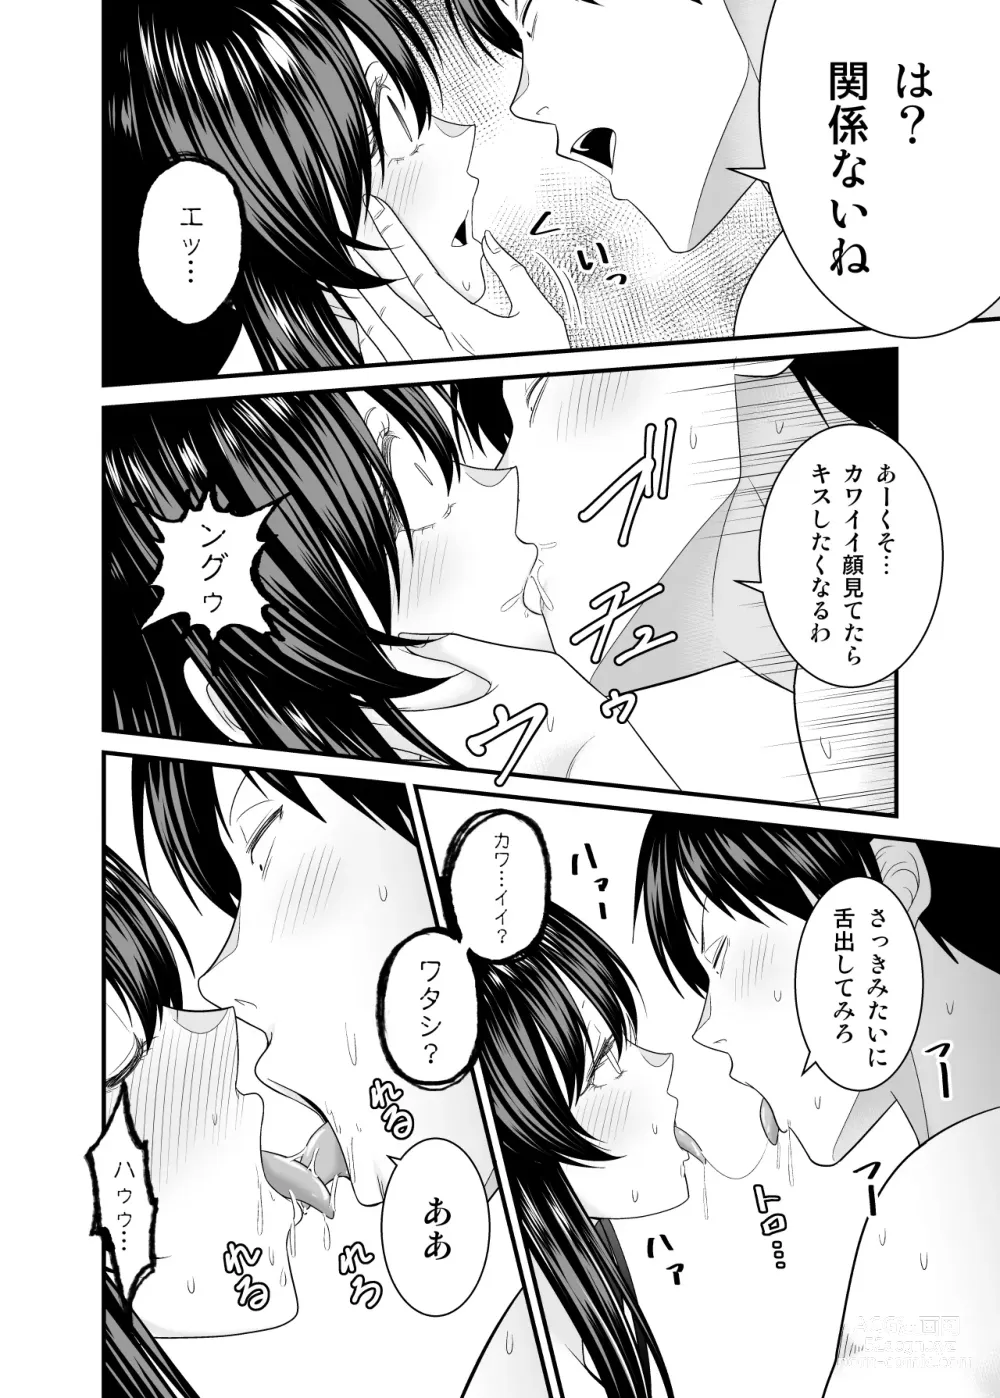 Page 35 of doujinshi ヤバい事故物件に女幽霊が出たけど無職底辺の俺はセックスしまくる